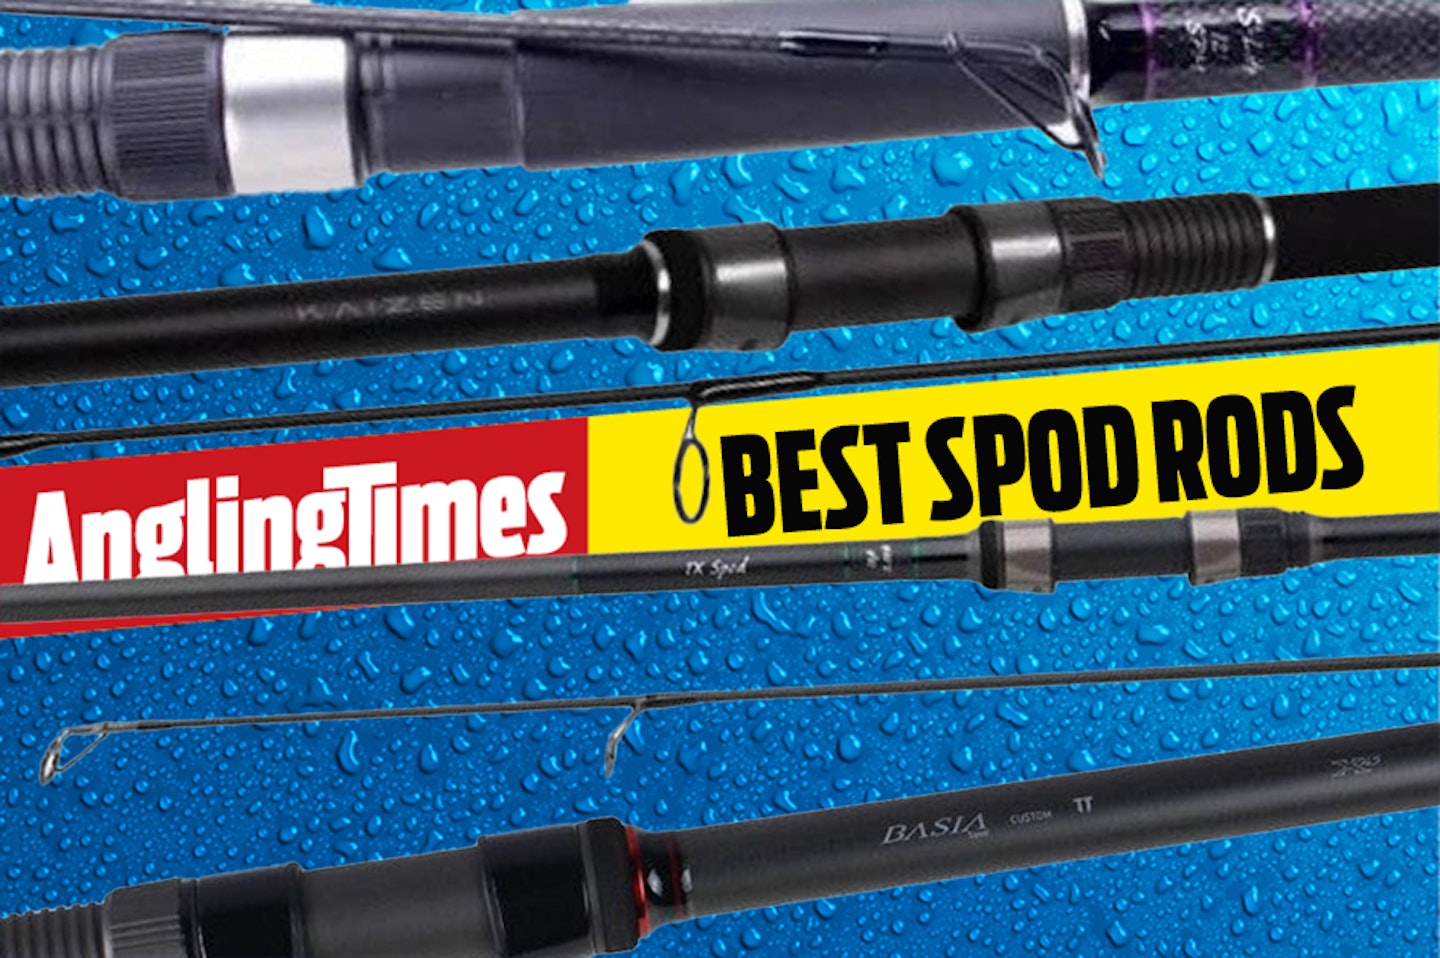 The best spod rods